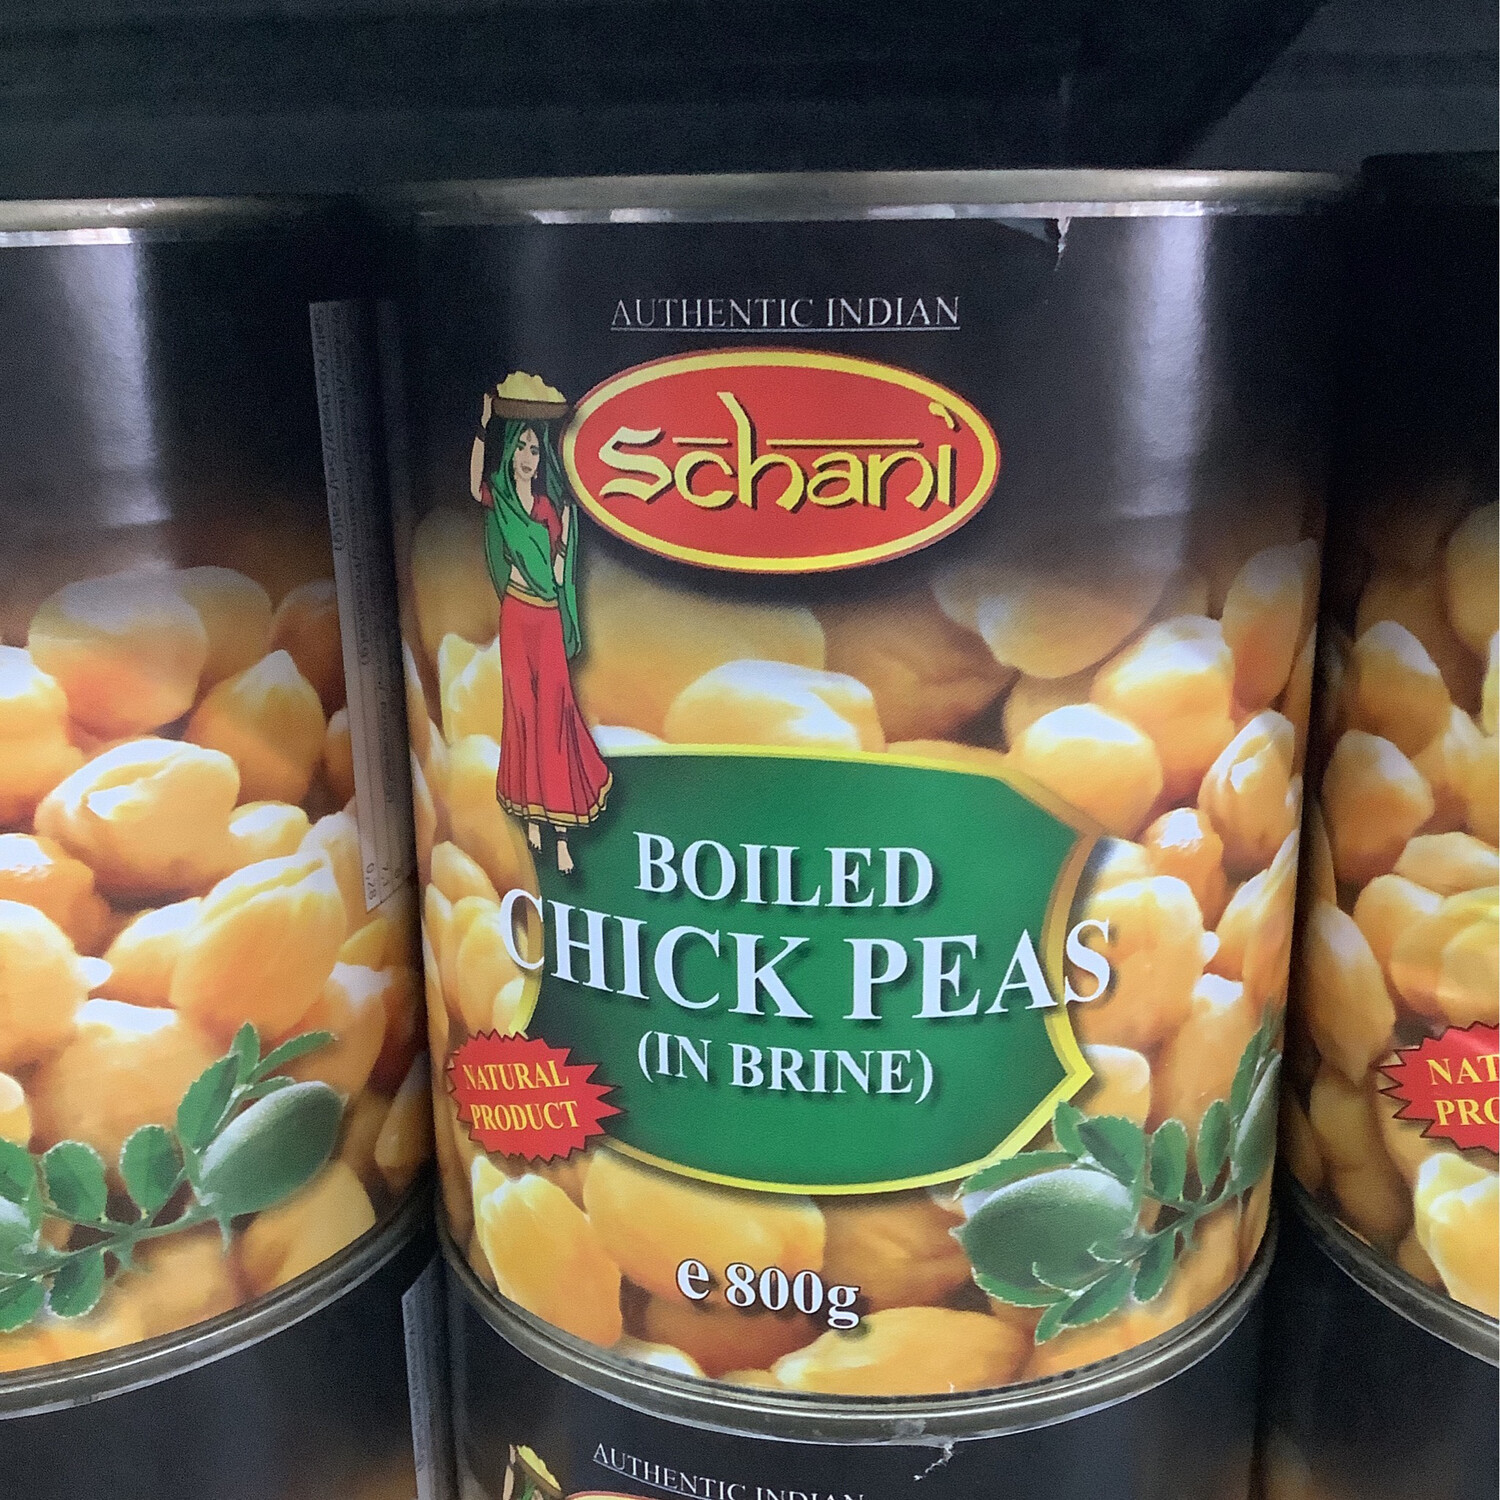 Schani Boiled Chick Peas 800g